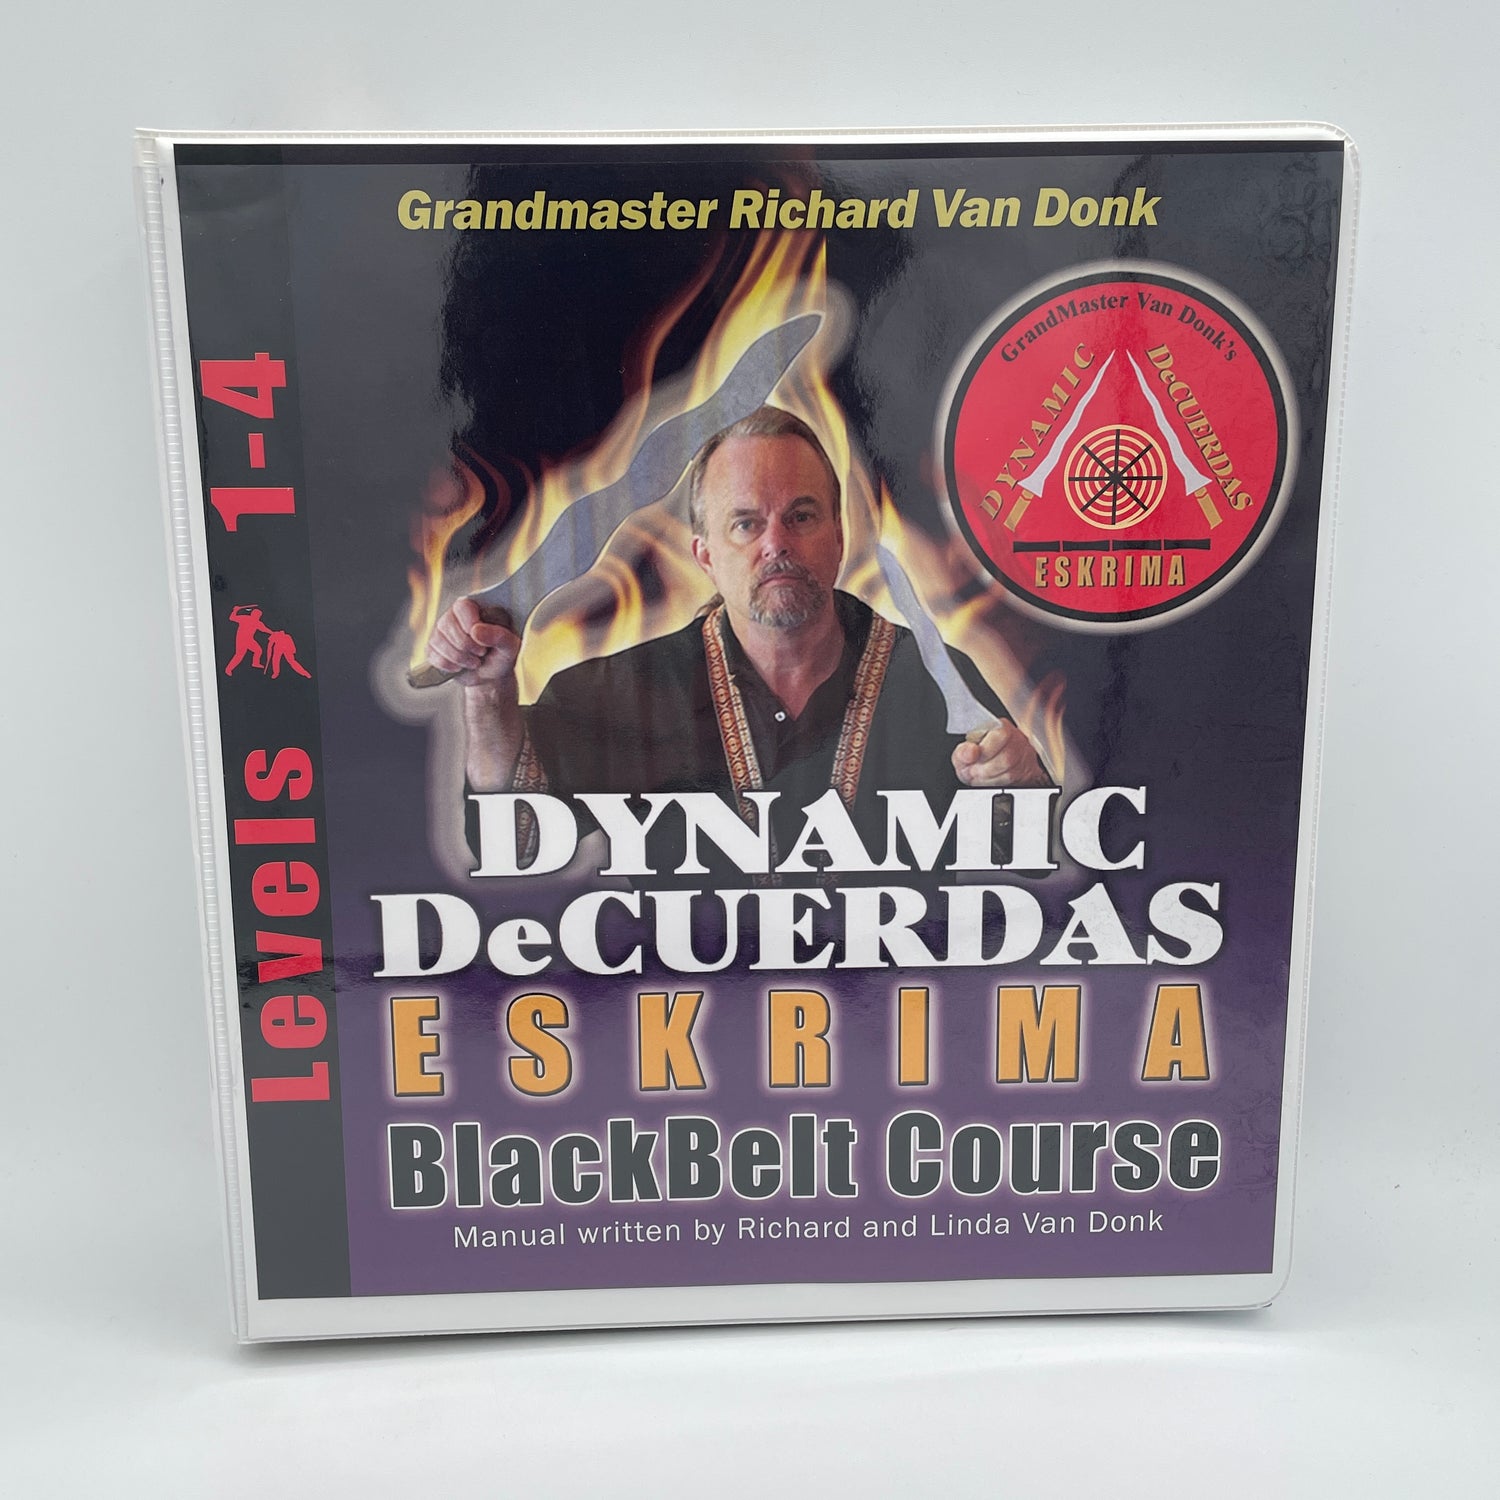 Decuerdas Escrima BlackBelt Course by Richard Van Donk